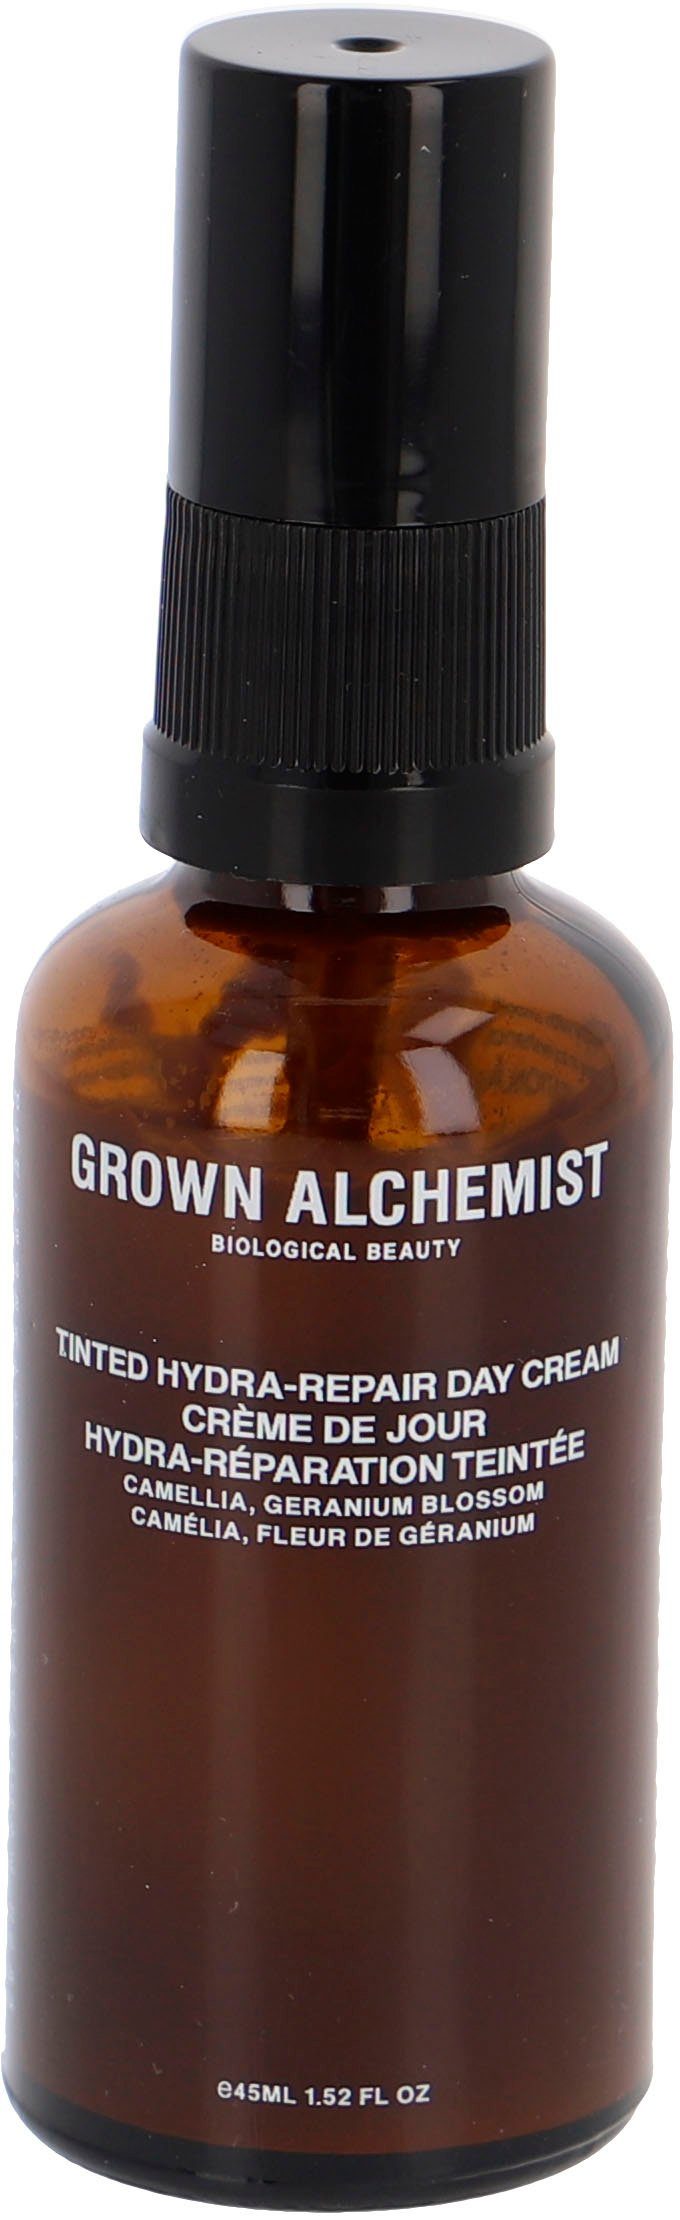 GROWN ALCHEMIST Getönte Gesichtscreme Tinted Hydra-Repair Day Cream,  Camellia, Geranium Blossom